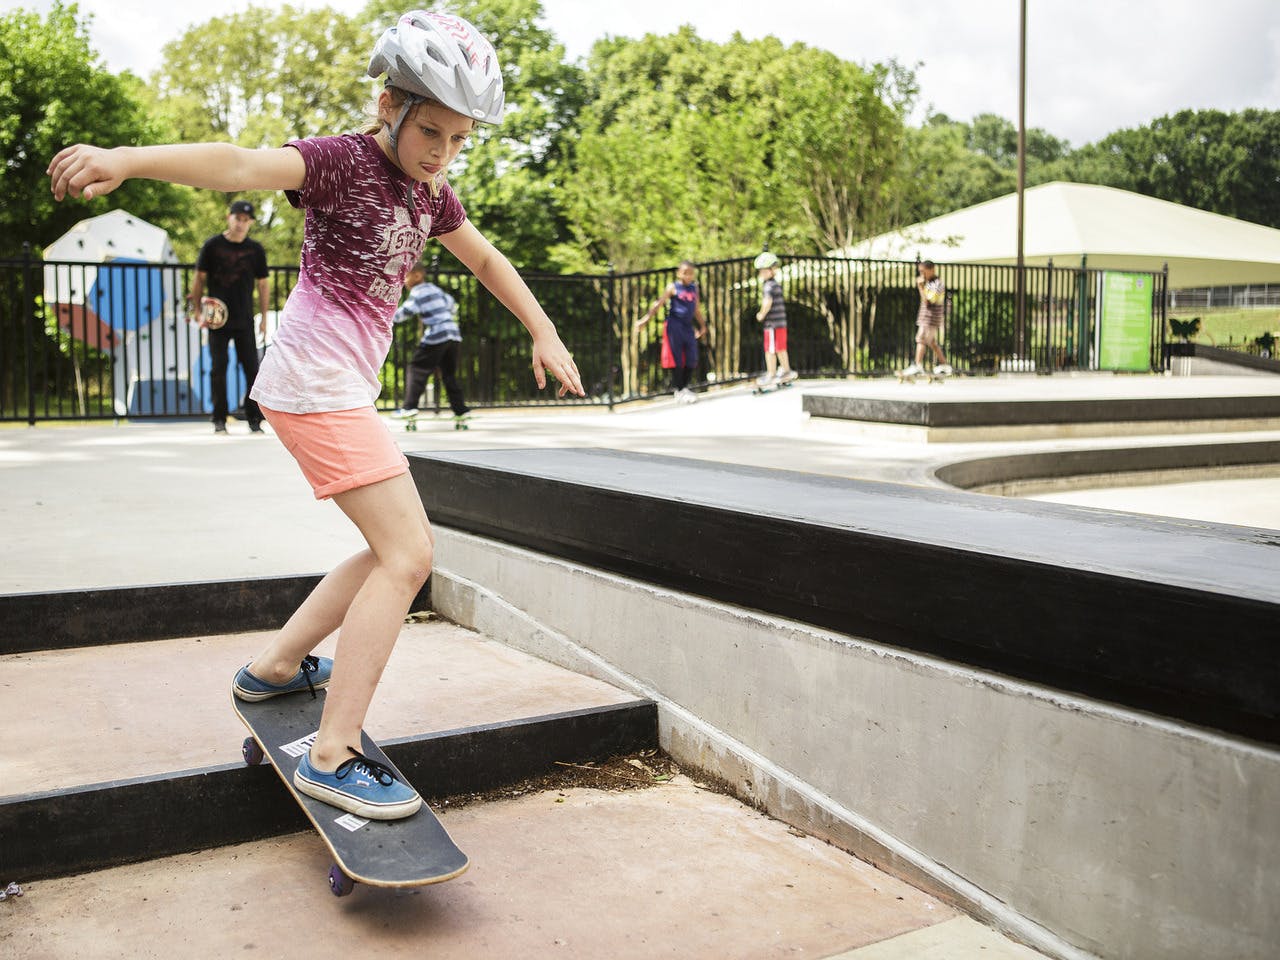 A girl skates down stairs at skatepark.